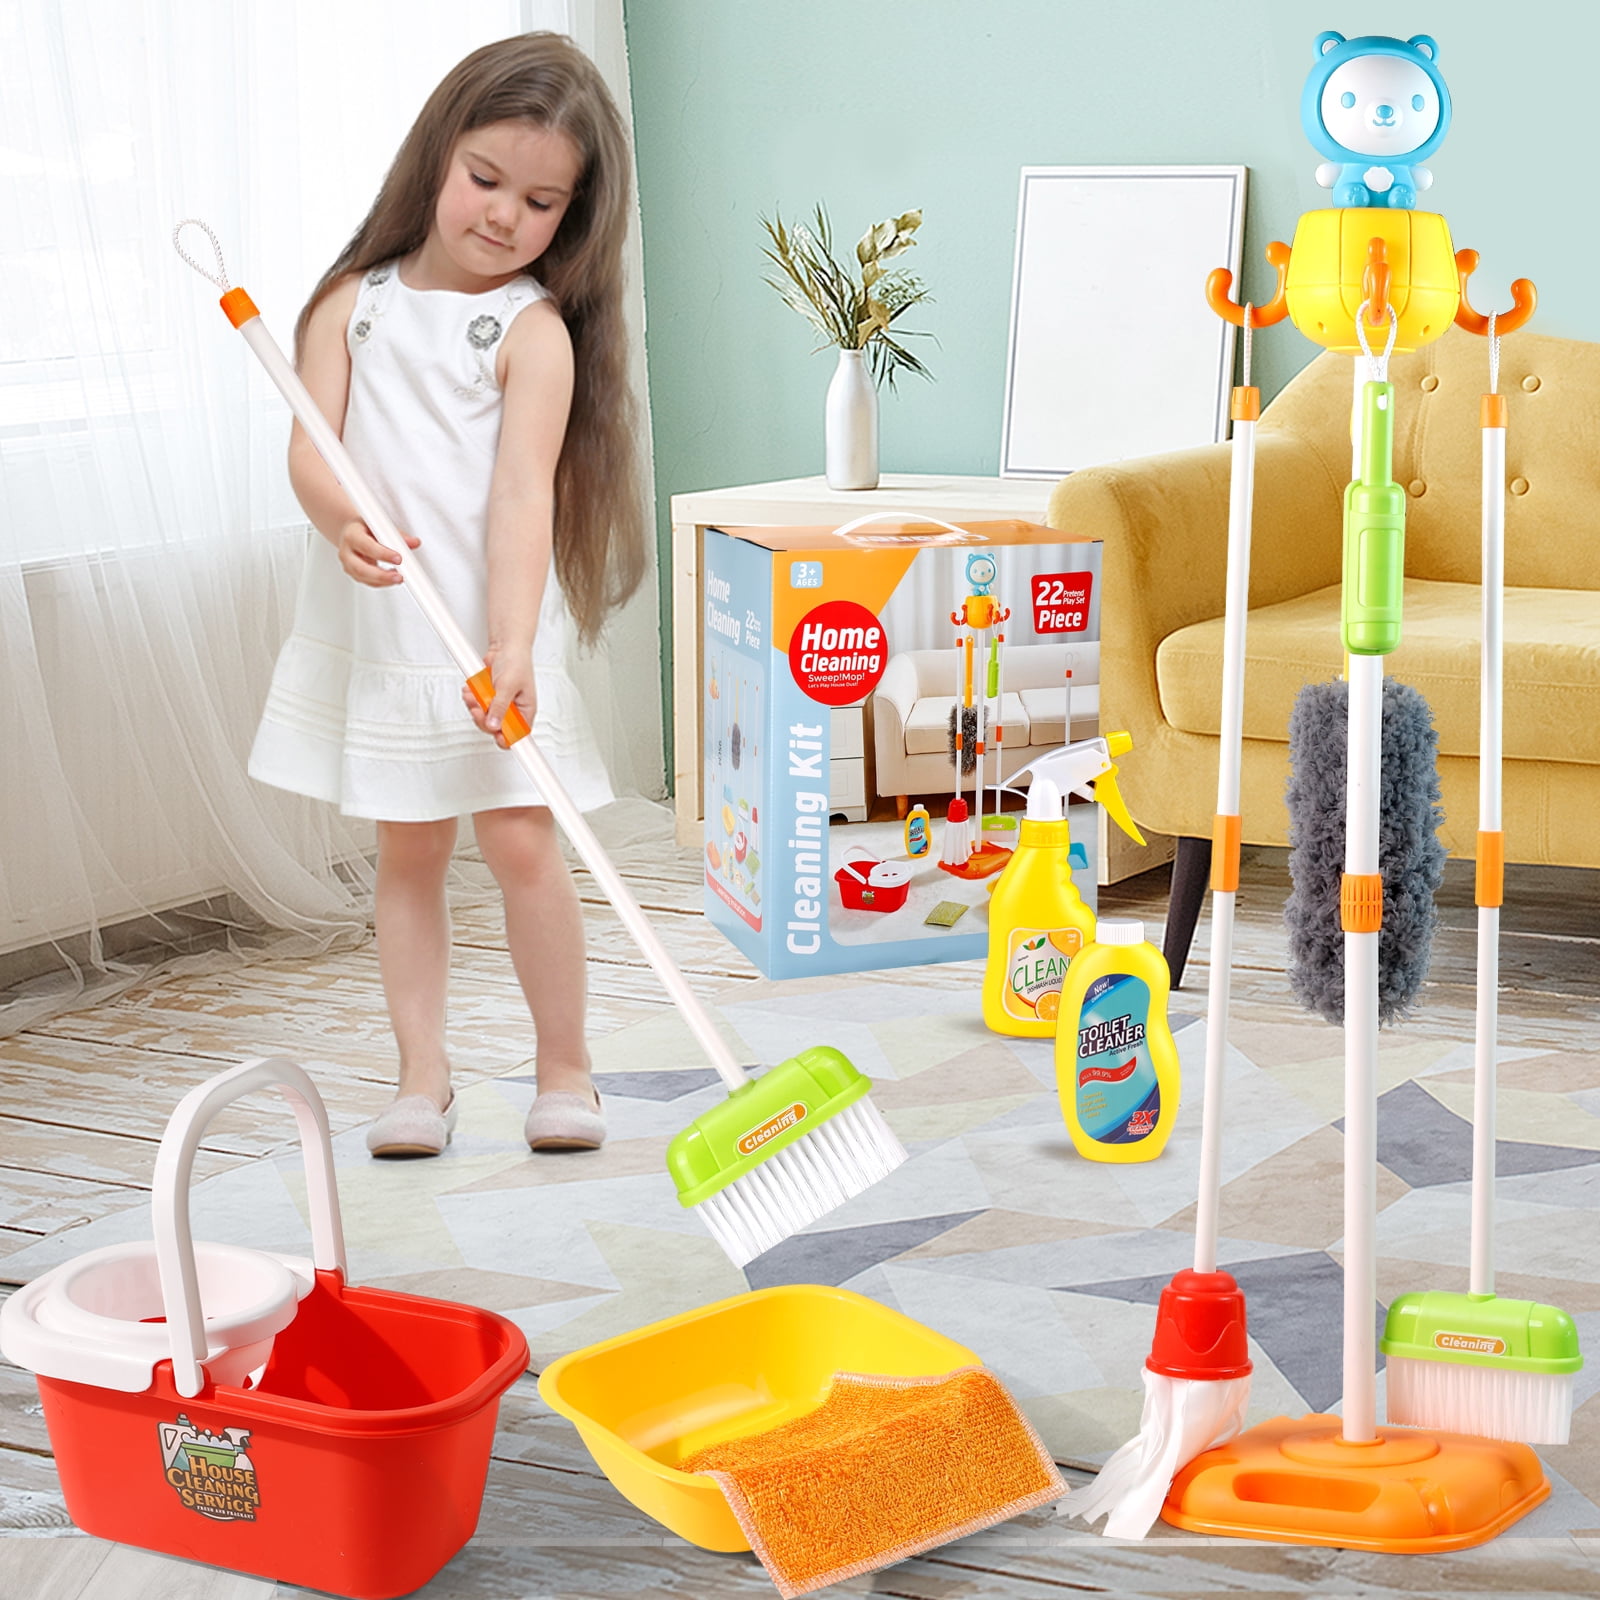 15 PCs Kids House Cleaning Set